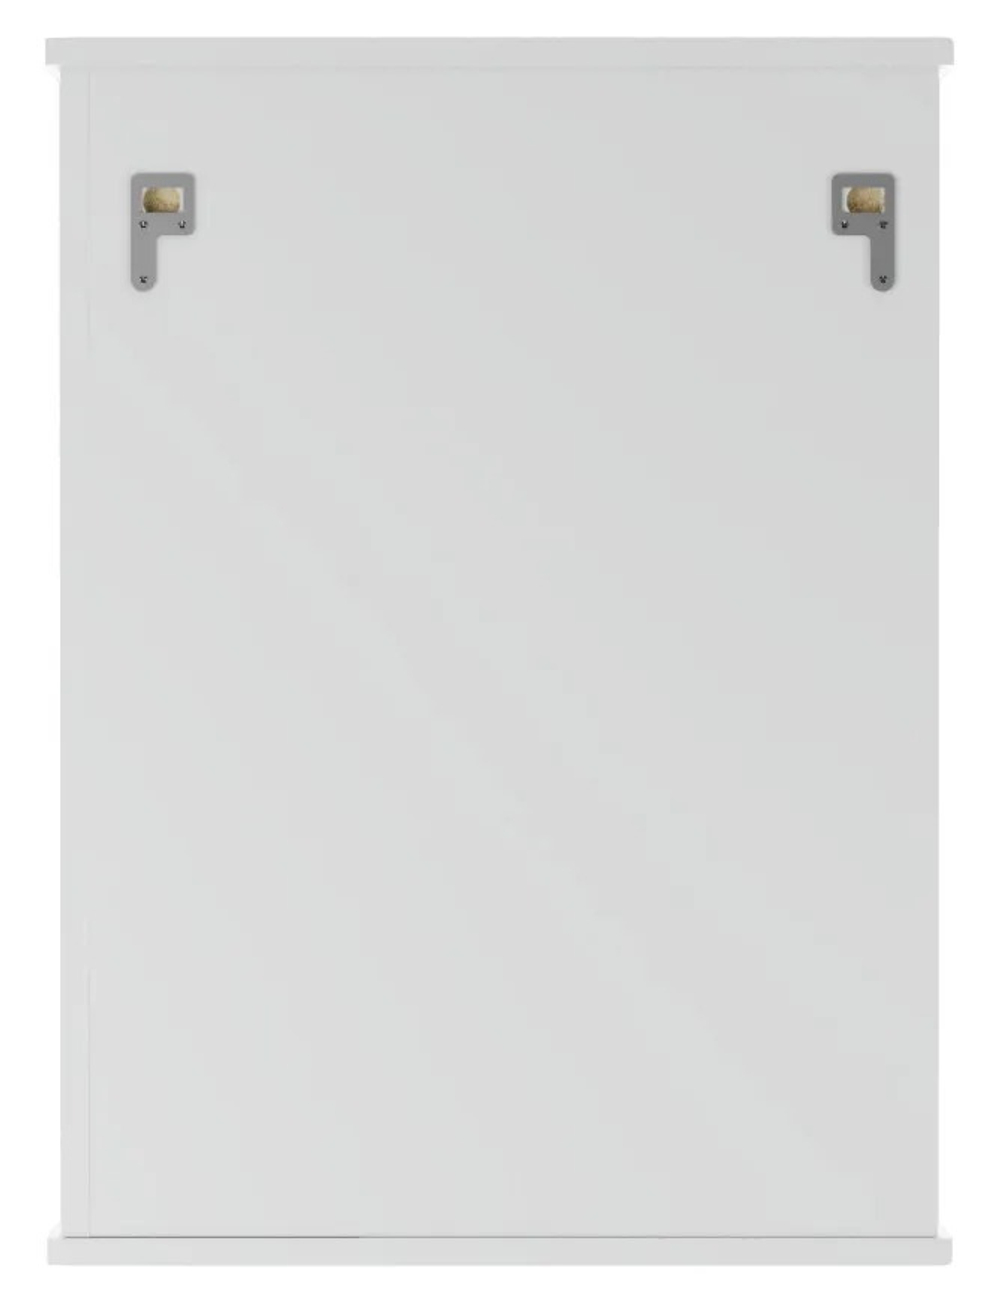 Зеркальный шкаф Айсберг Классик 500 (515х154х700 мм) Левый DA1048HZ